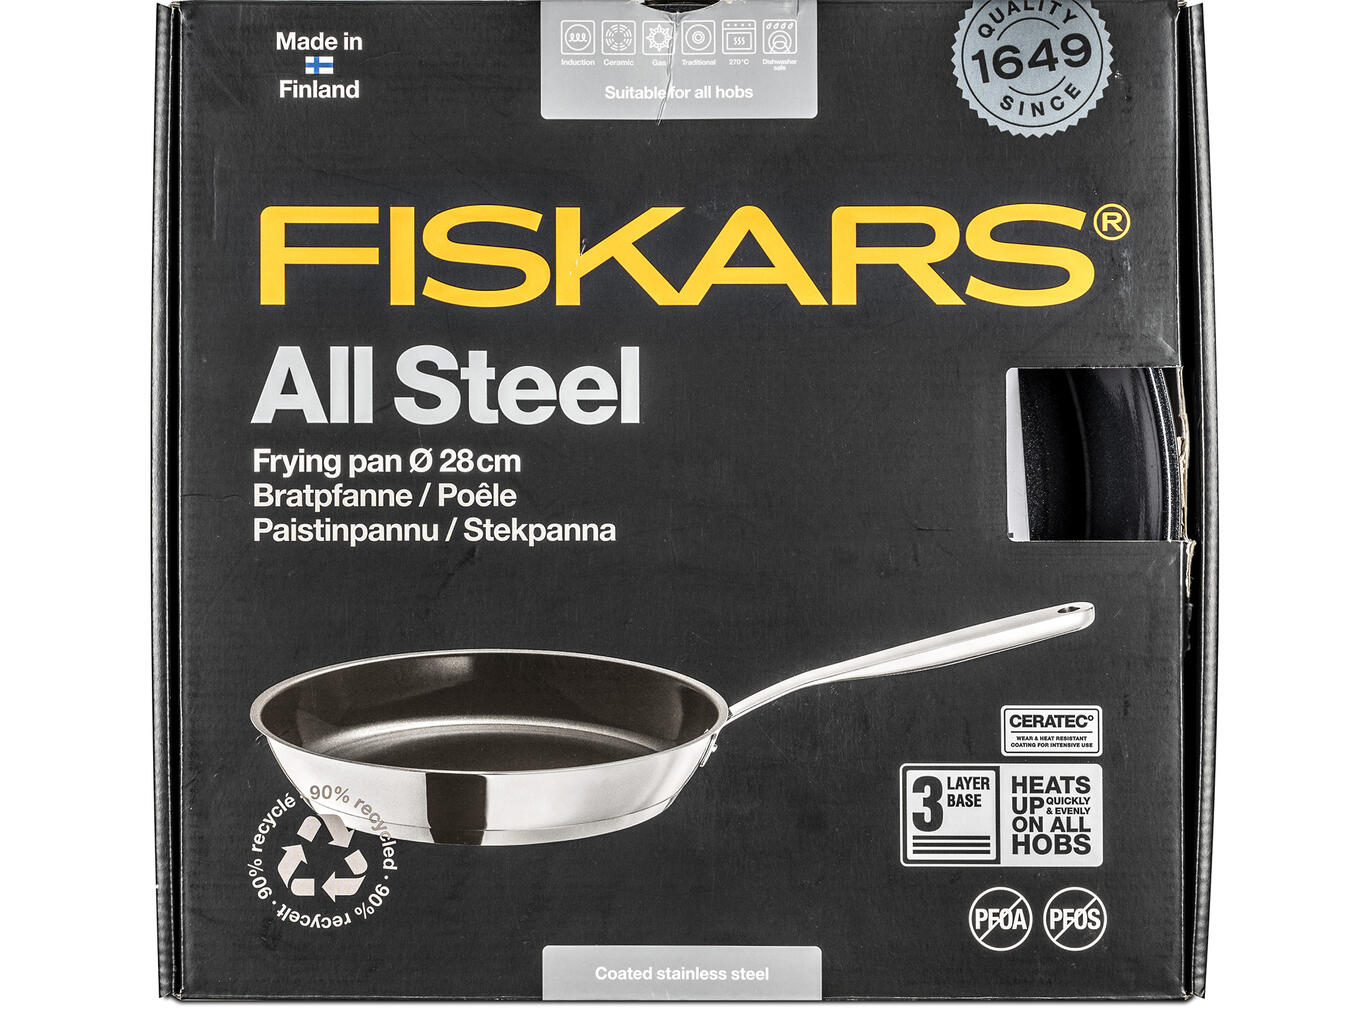 All Steel Fiskars